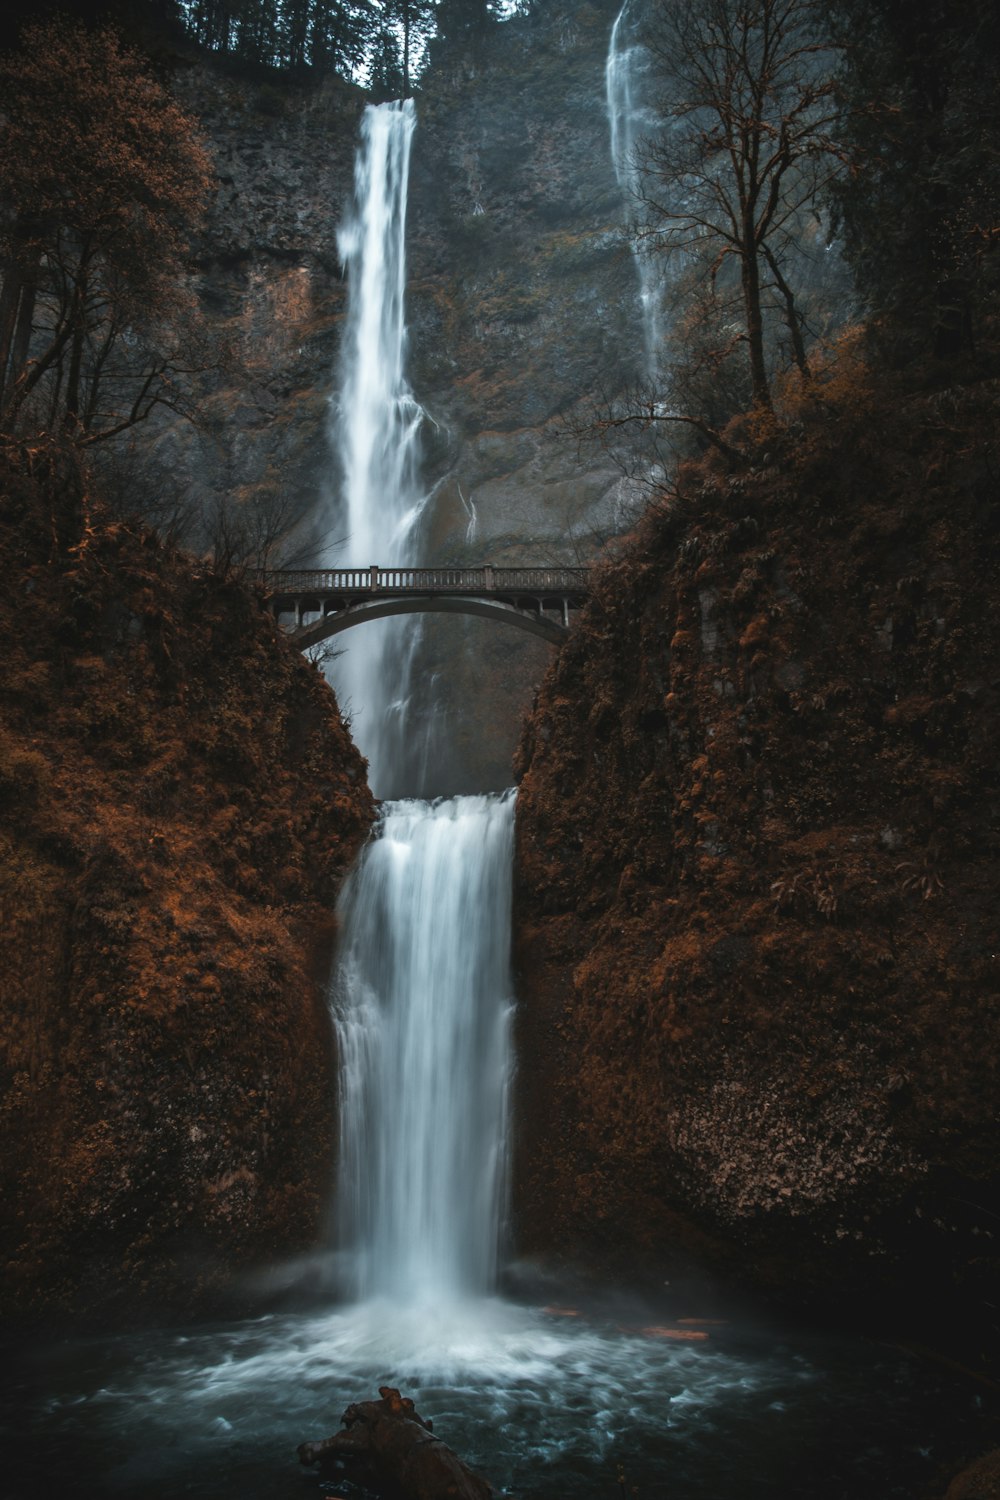 waterfalls under bridge during daytime